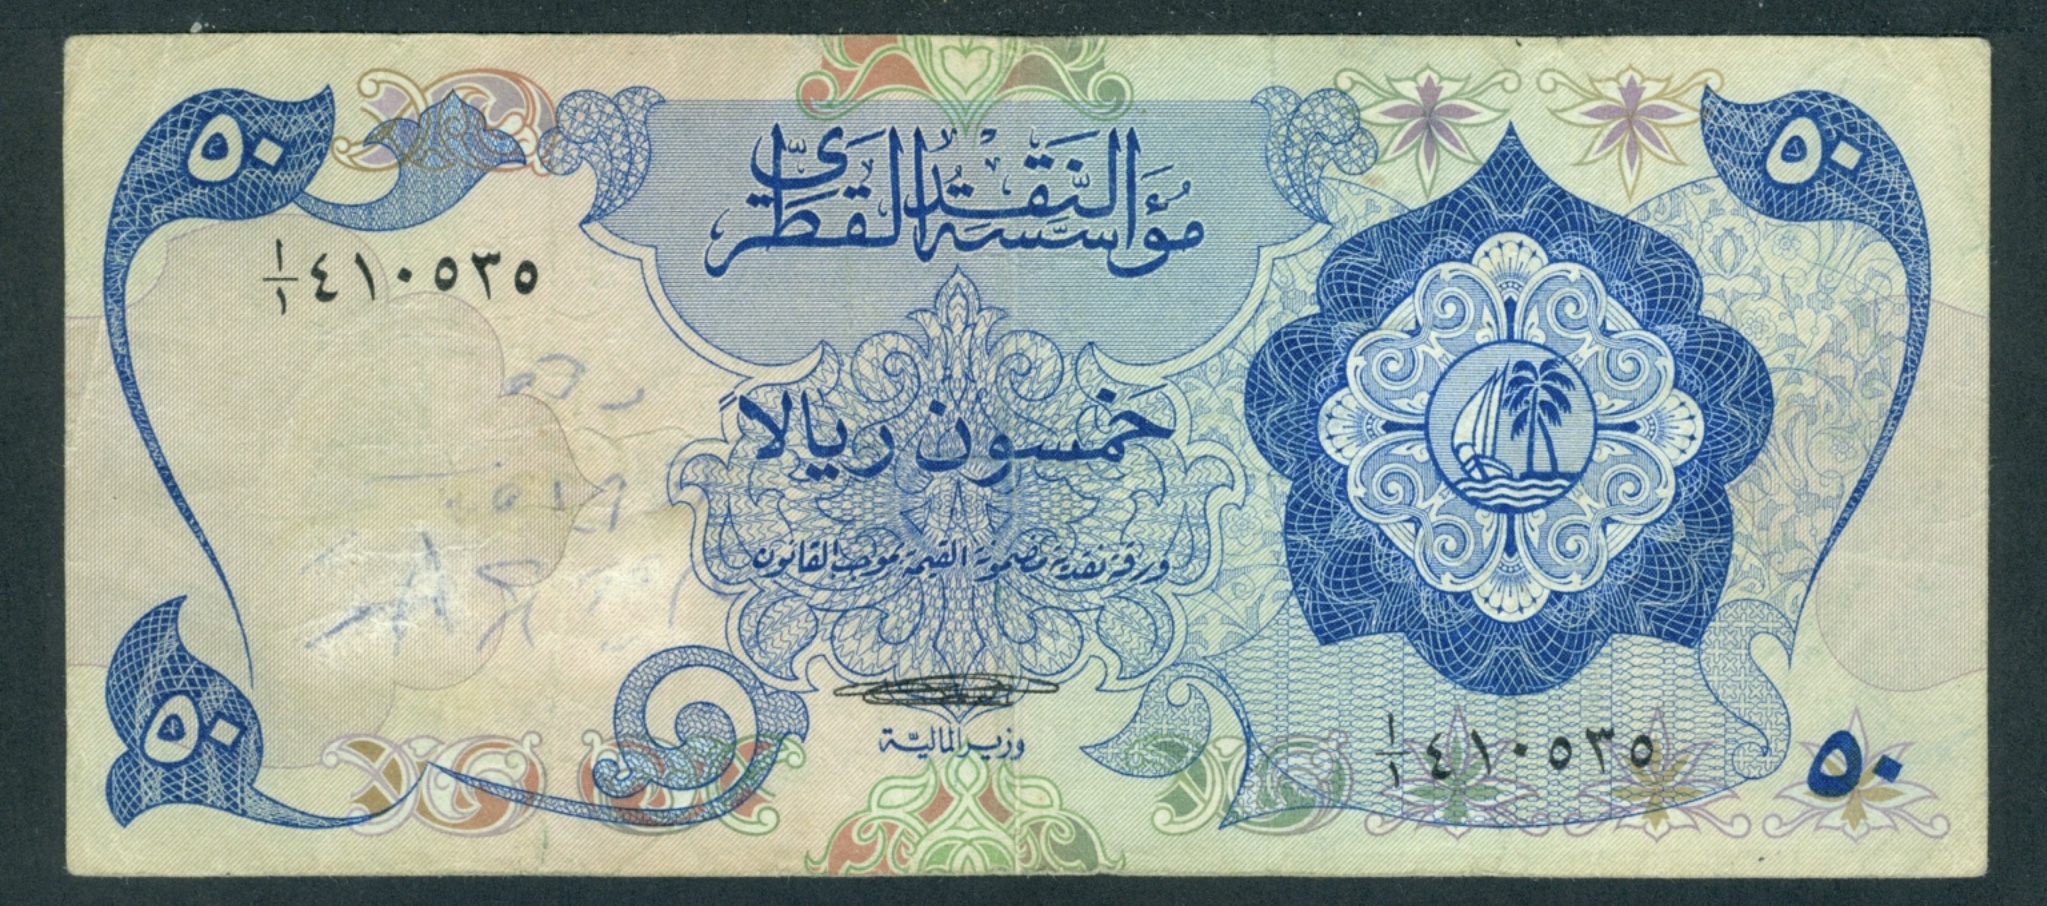 1973 Qatar 50 Riyals Banknote P-4 First Issue The Monetary Agency SN: 1/A 410535